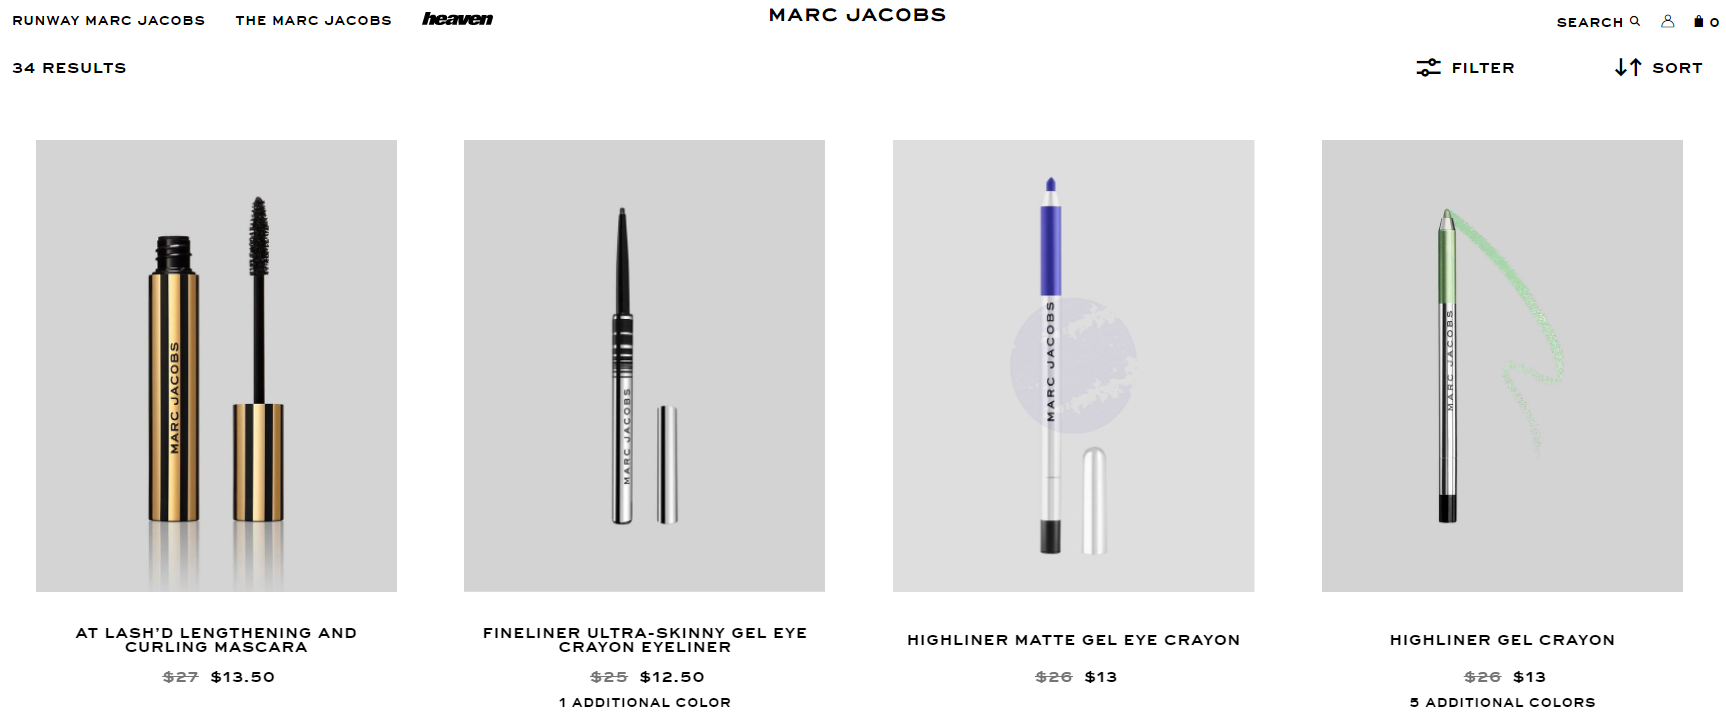 20211128173653 - Marc Jacobs Beauty Cyber Monday 2022